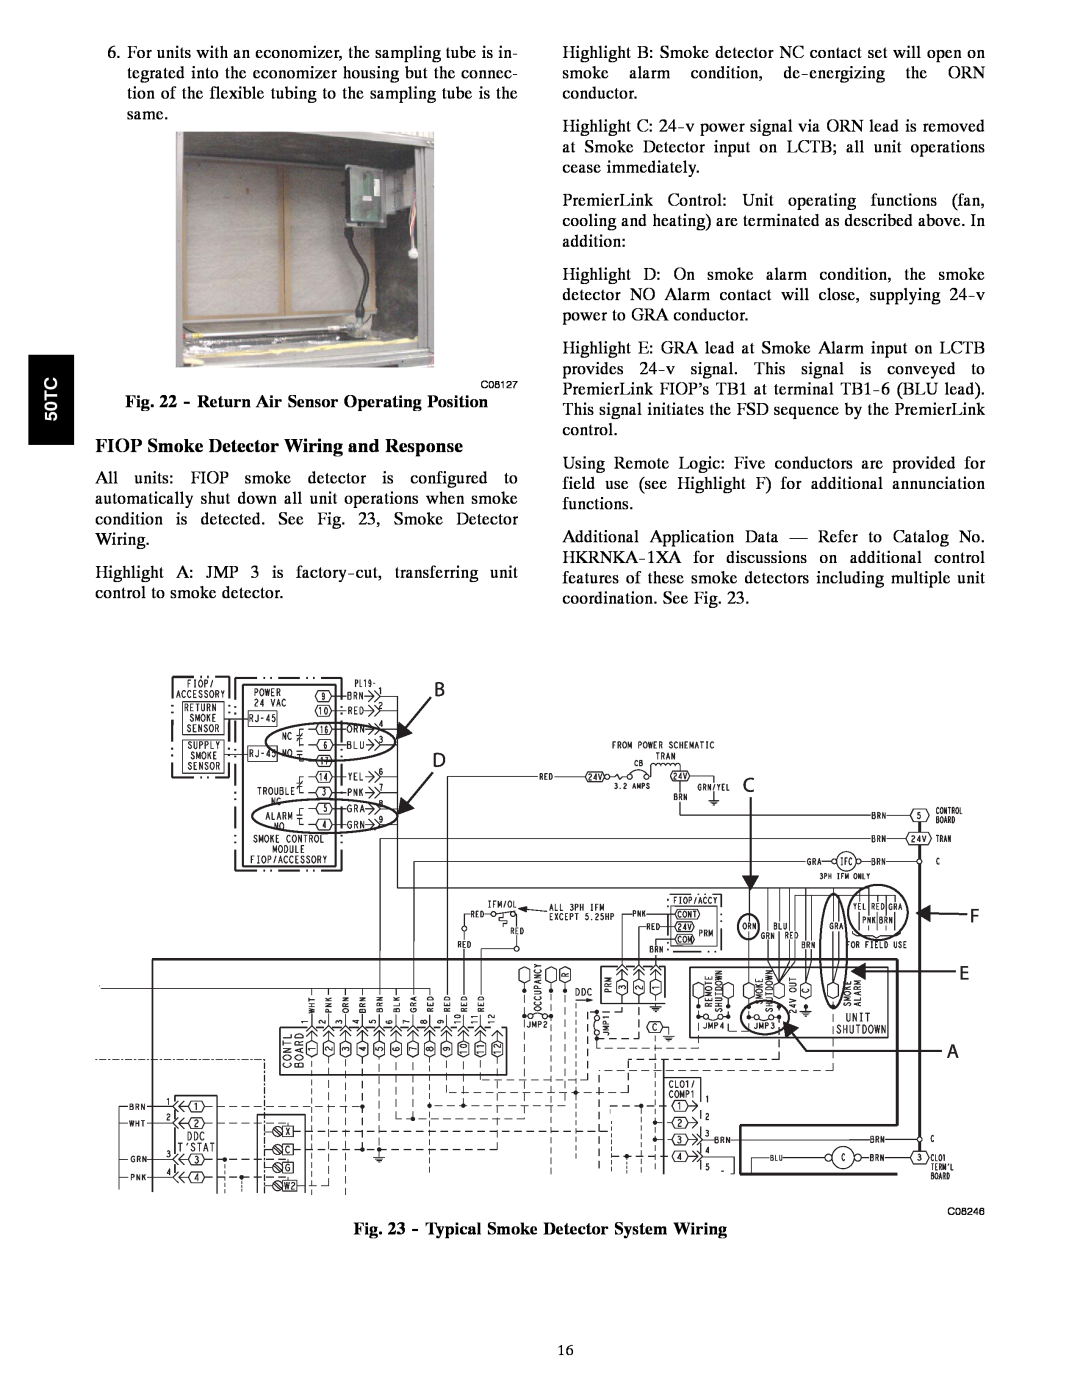 Carrier 50TCA04-A07 appendix FIOP Smoke Detector Wiring and Response, Return Air Sensor Operating Position, B D C F E A 